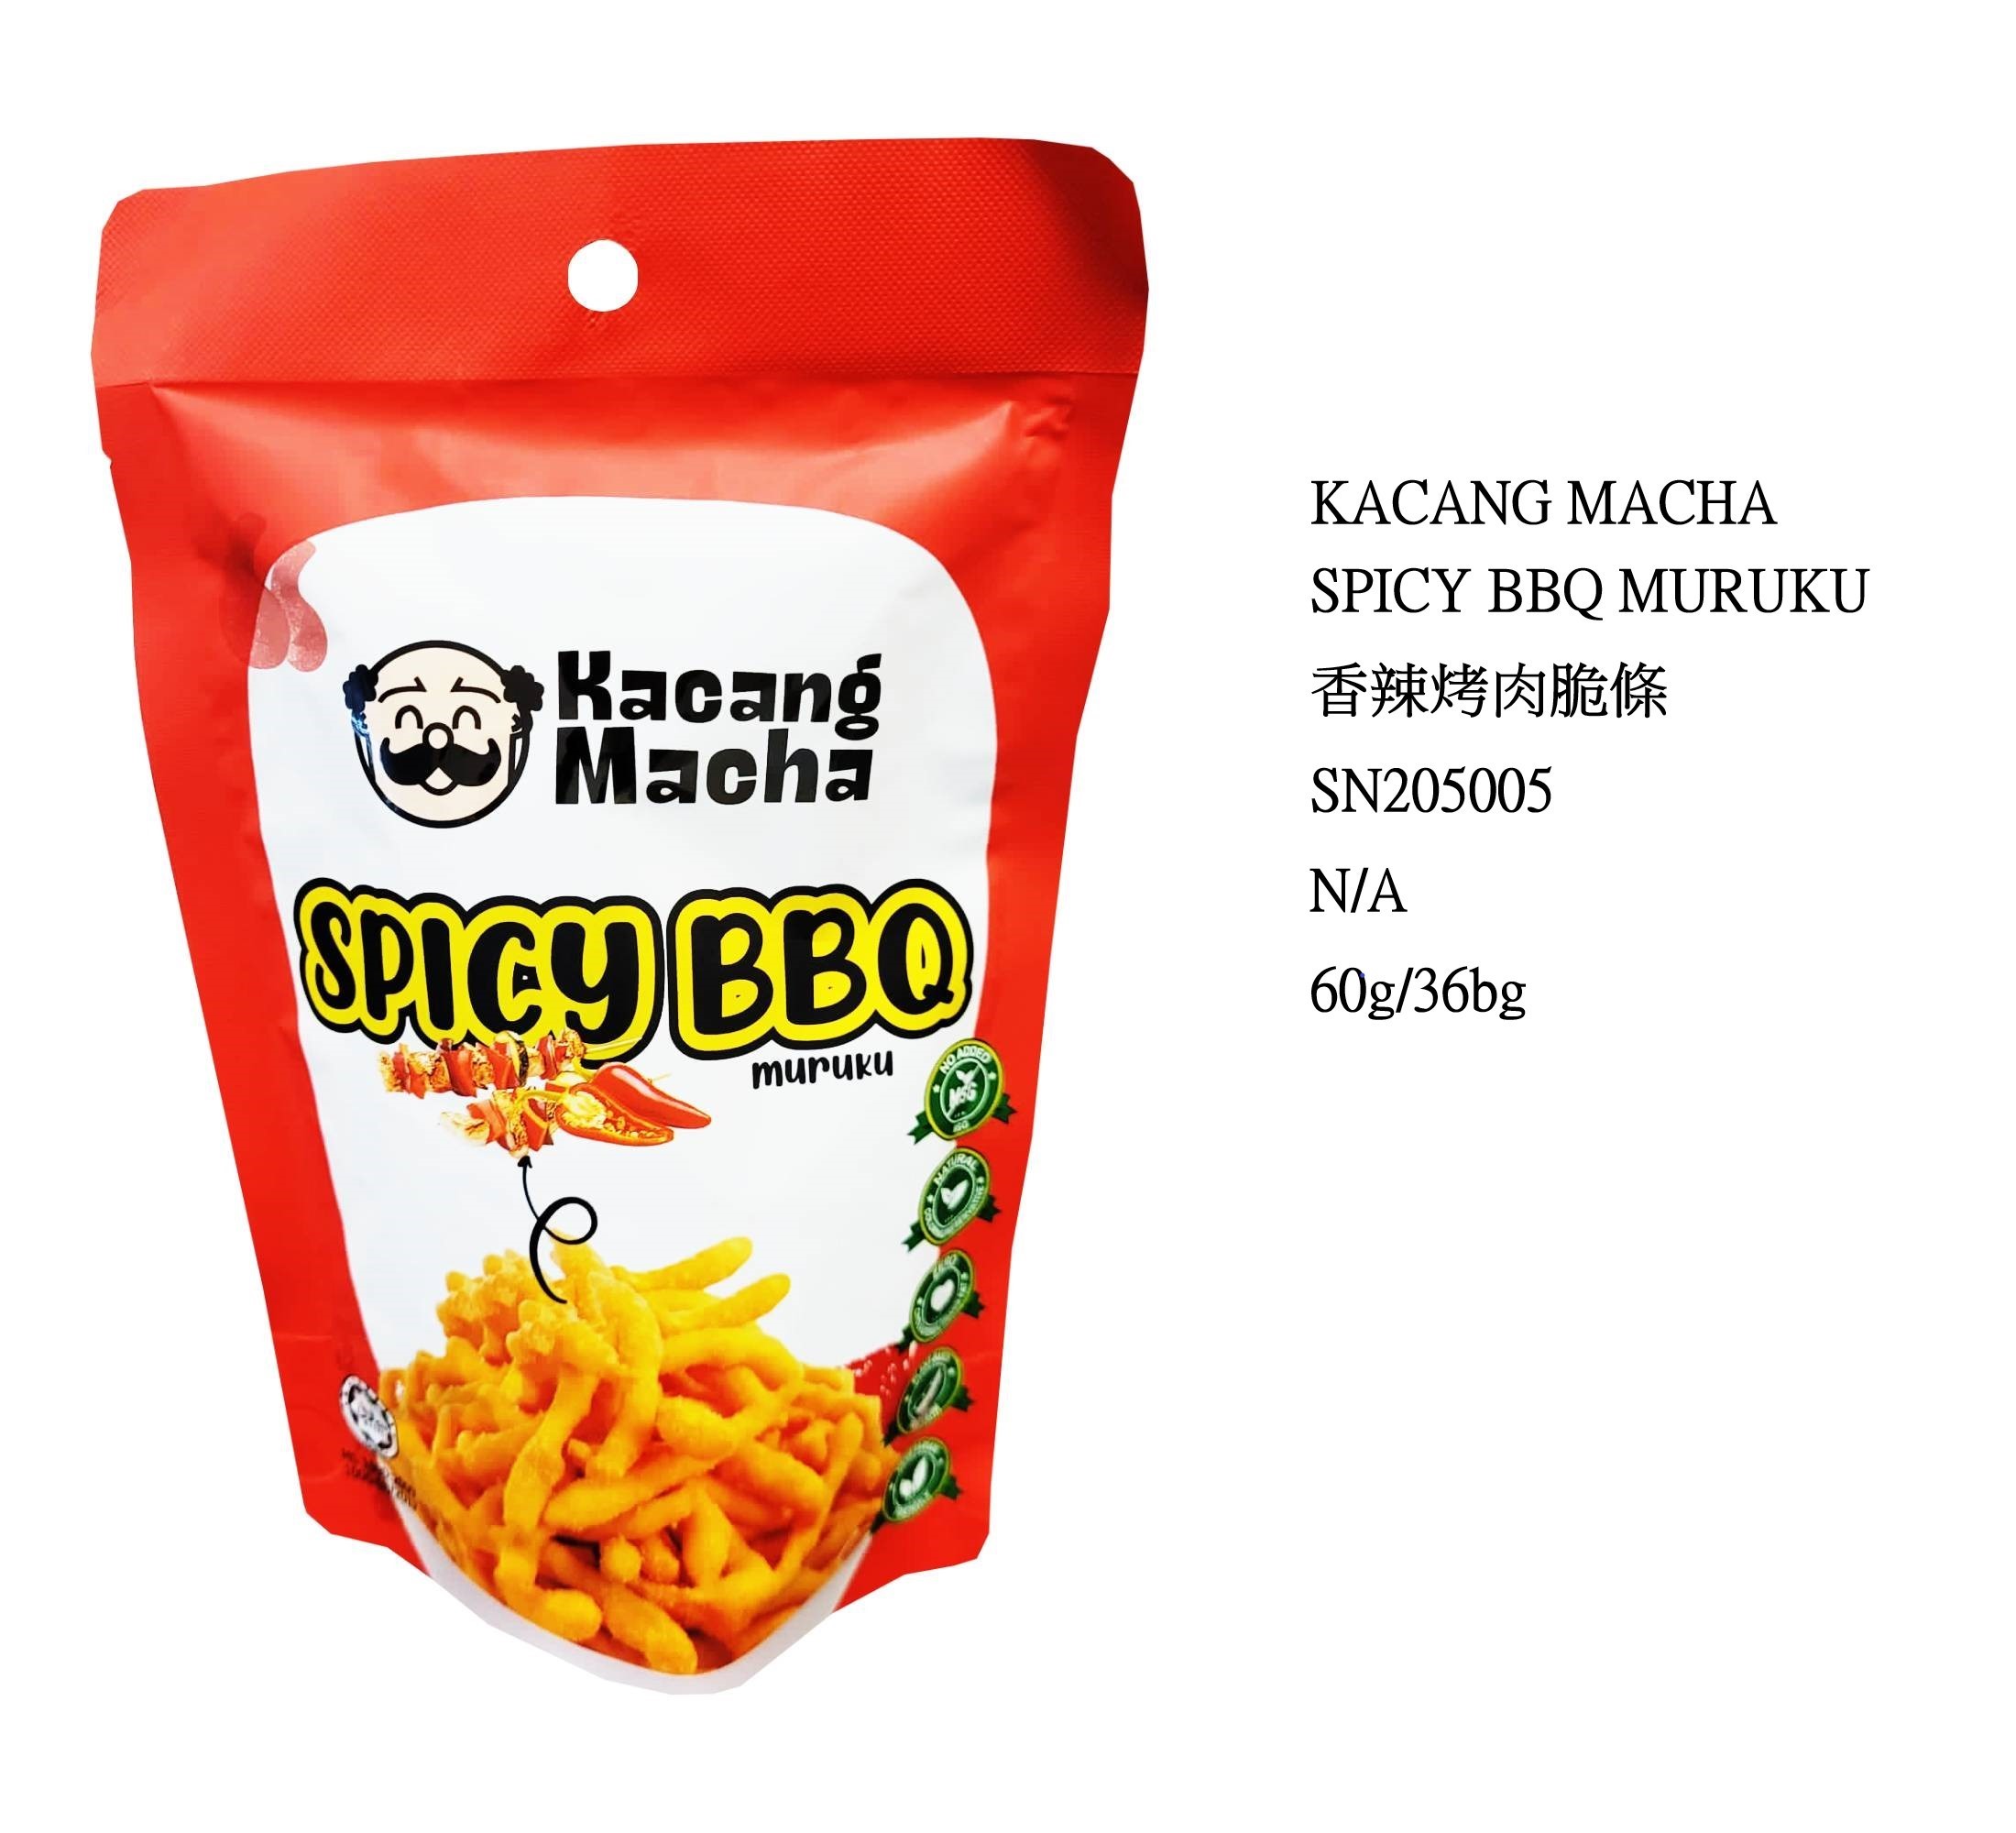 KACANG MACHA SPICY BBQ MURUKU SN205005